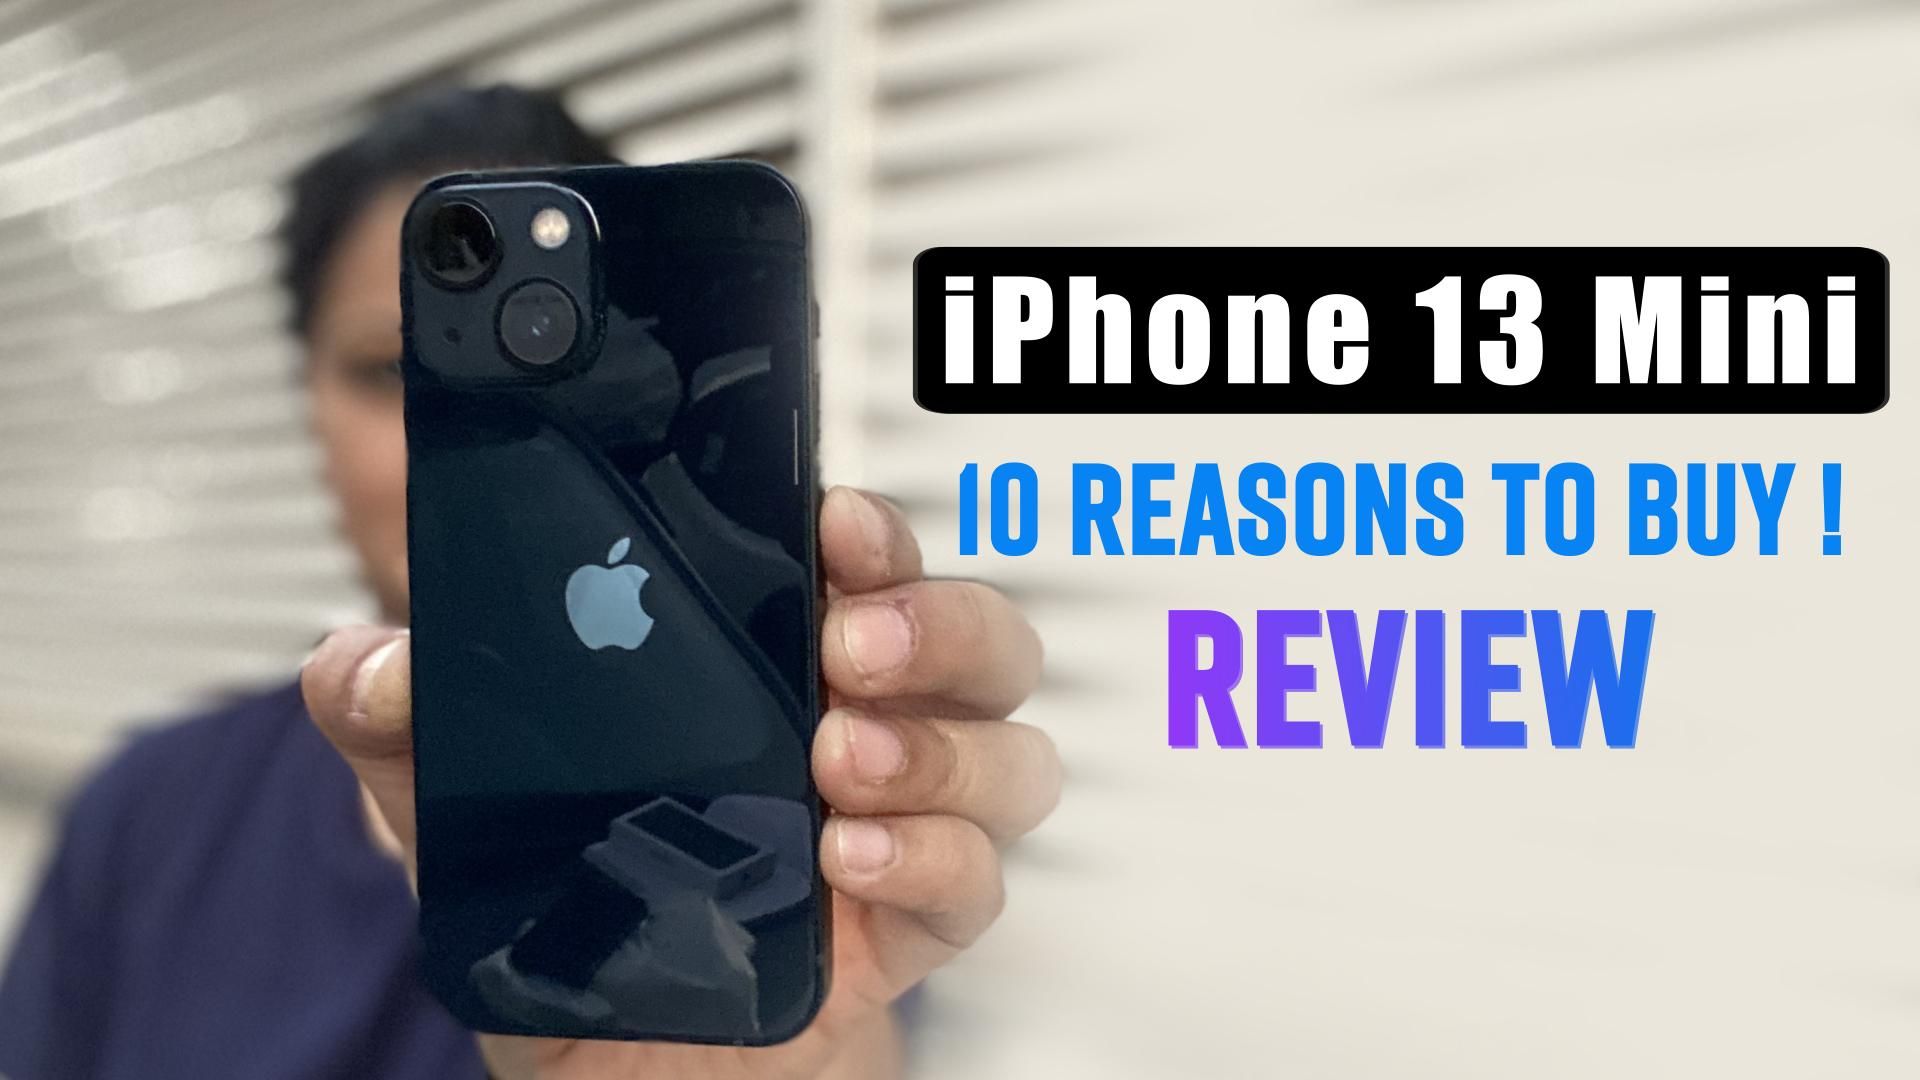 Apple iPhone 13 Mini review